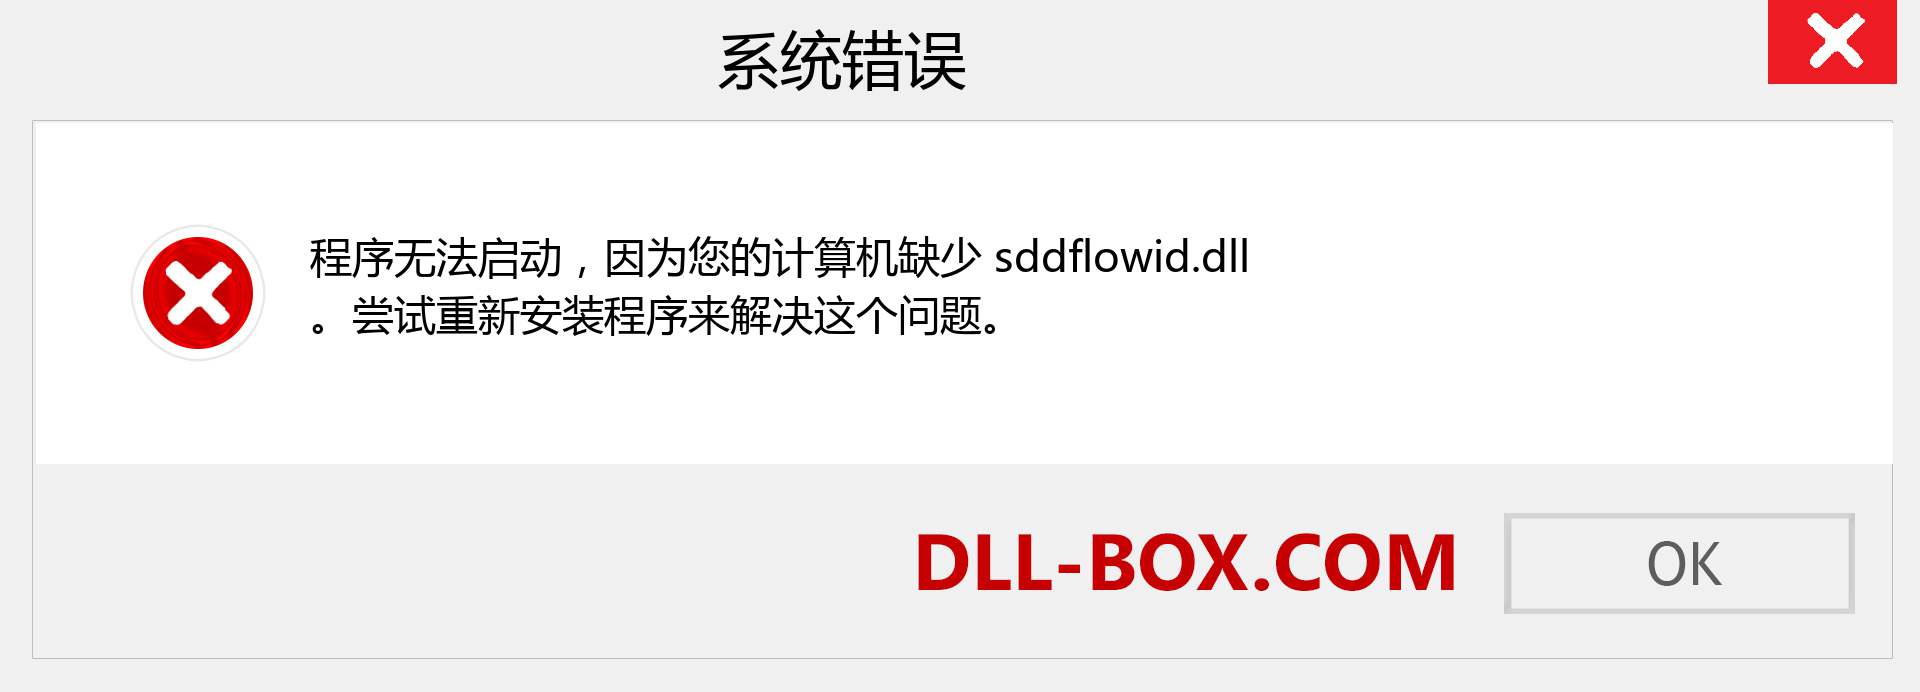 sddflowid.dll 文件丢失？。 适用于 Windows 7、8、10 的下载 - 修复 Windows、照片、图像上的 sddflowid dll 丢失错误